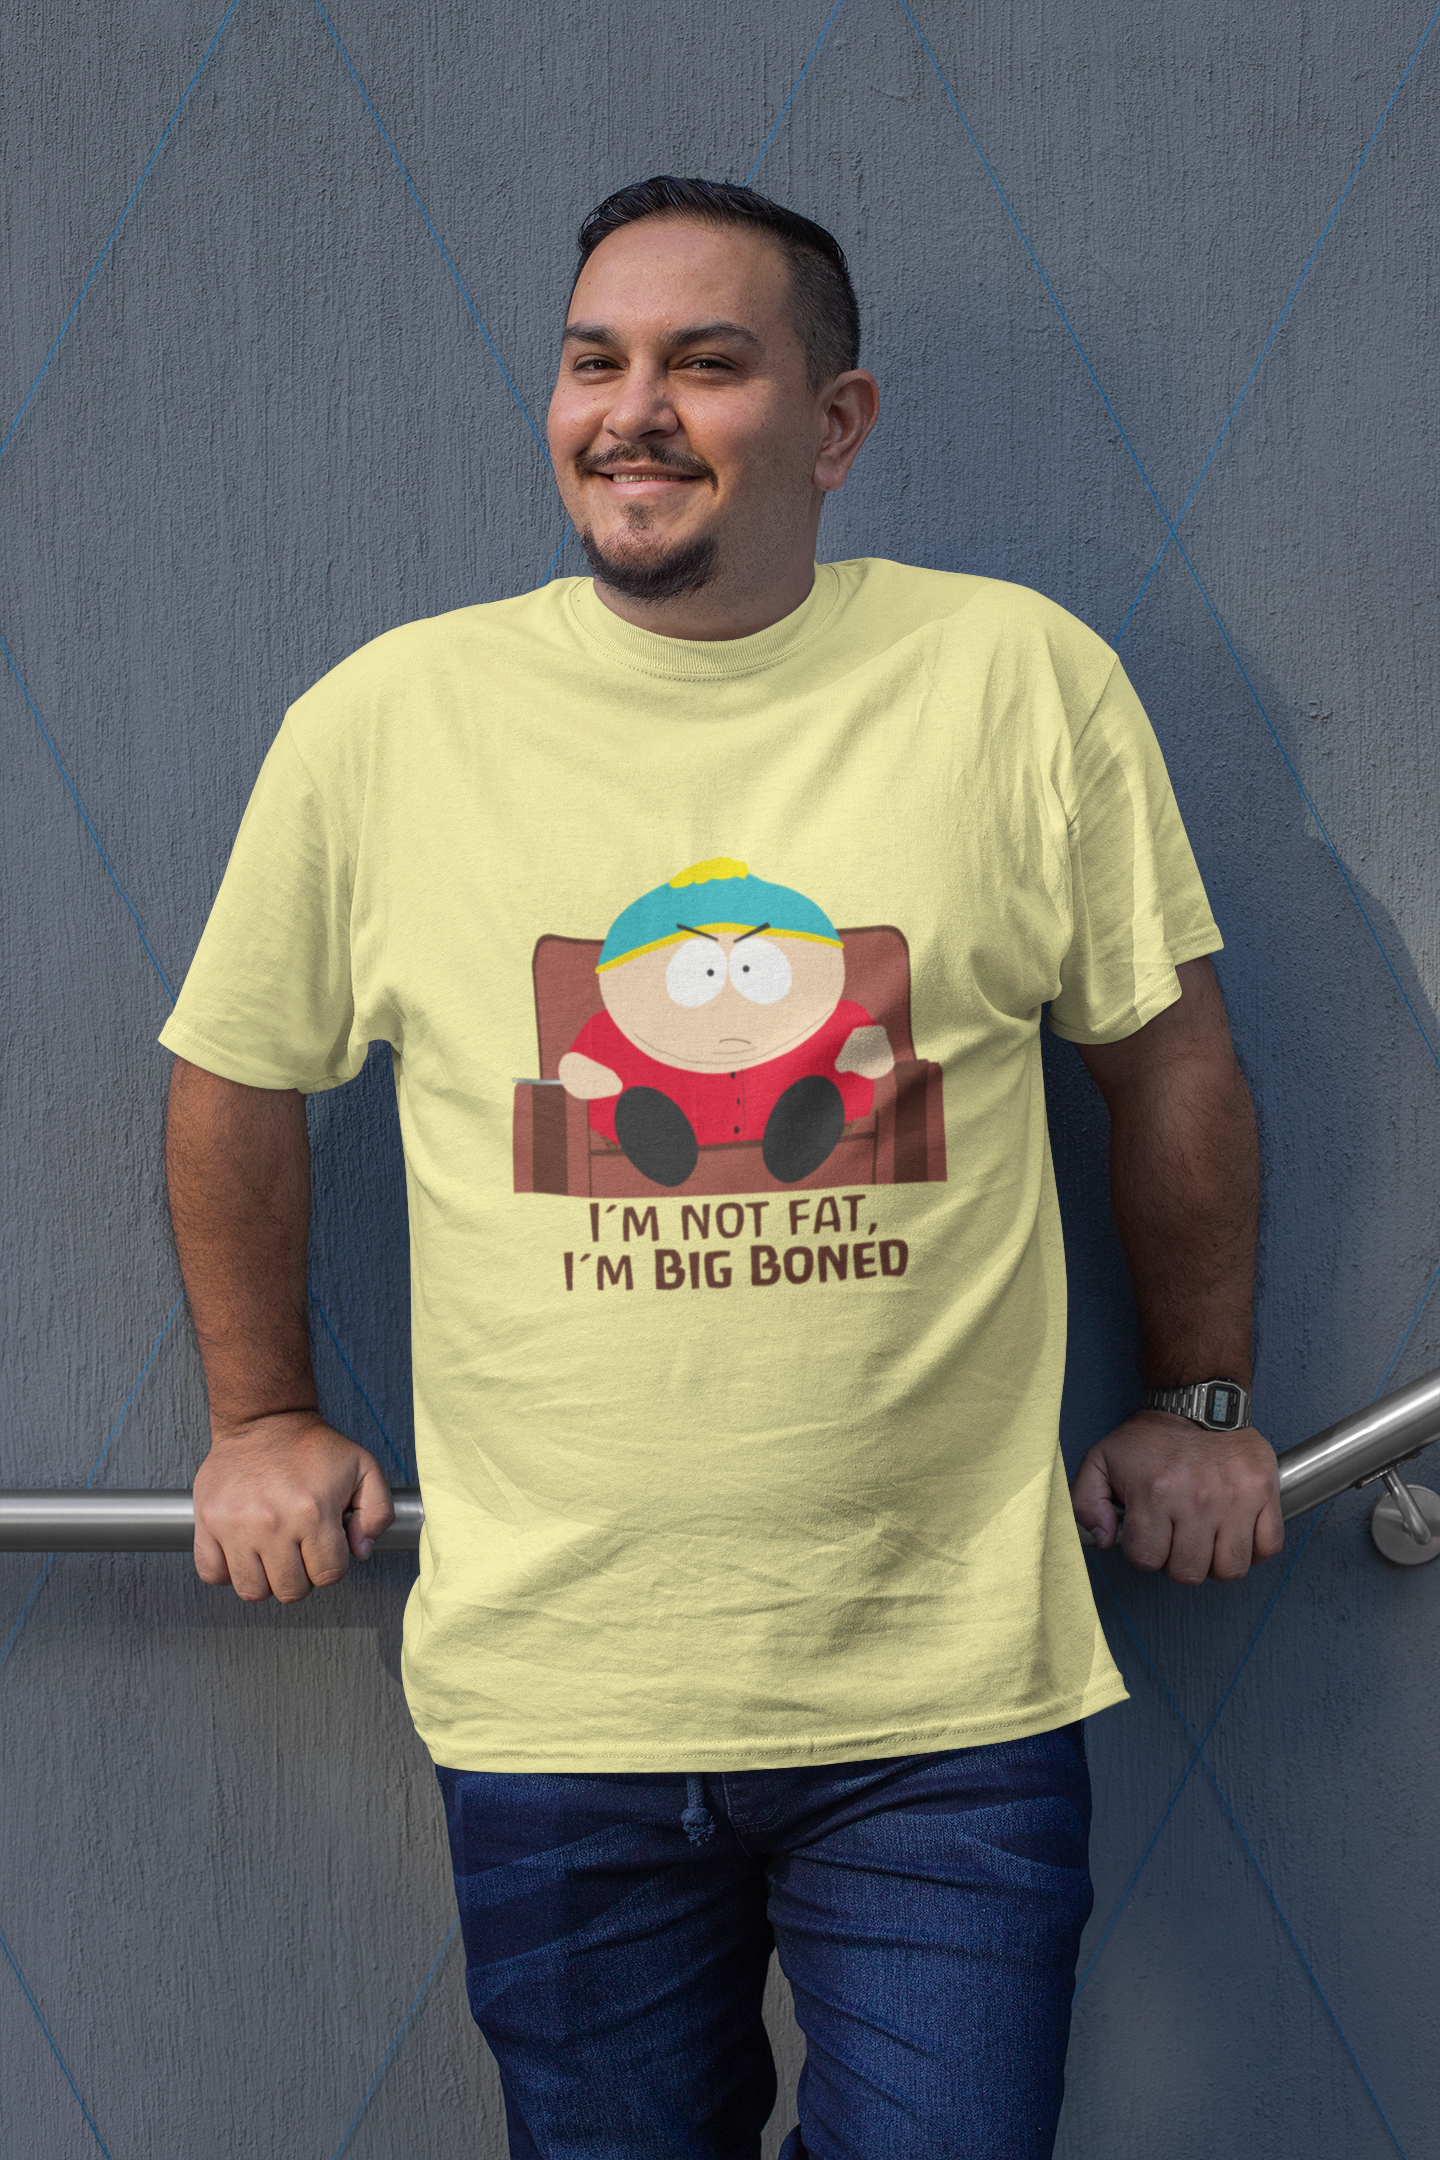 "I'M NOT FAT, I'M BIG BONED" - Eric Cartman, South Park | Unisex T-Shirt